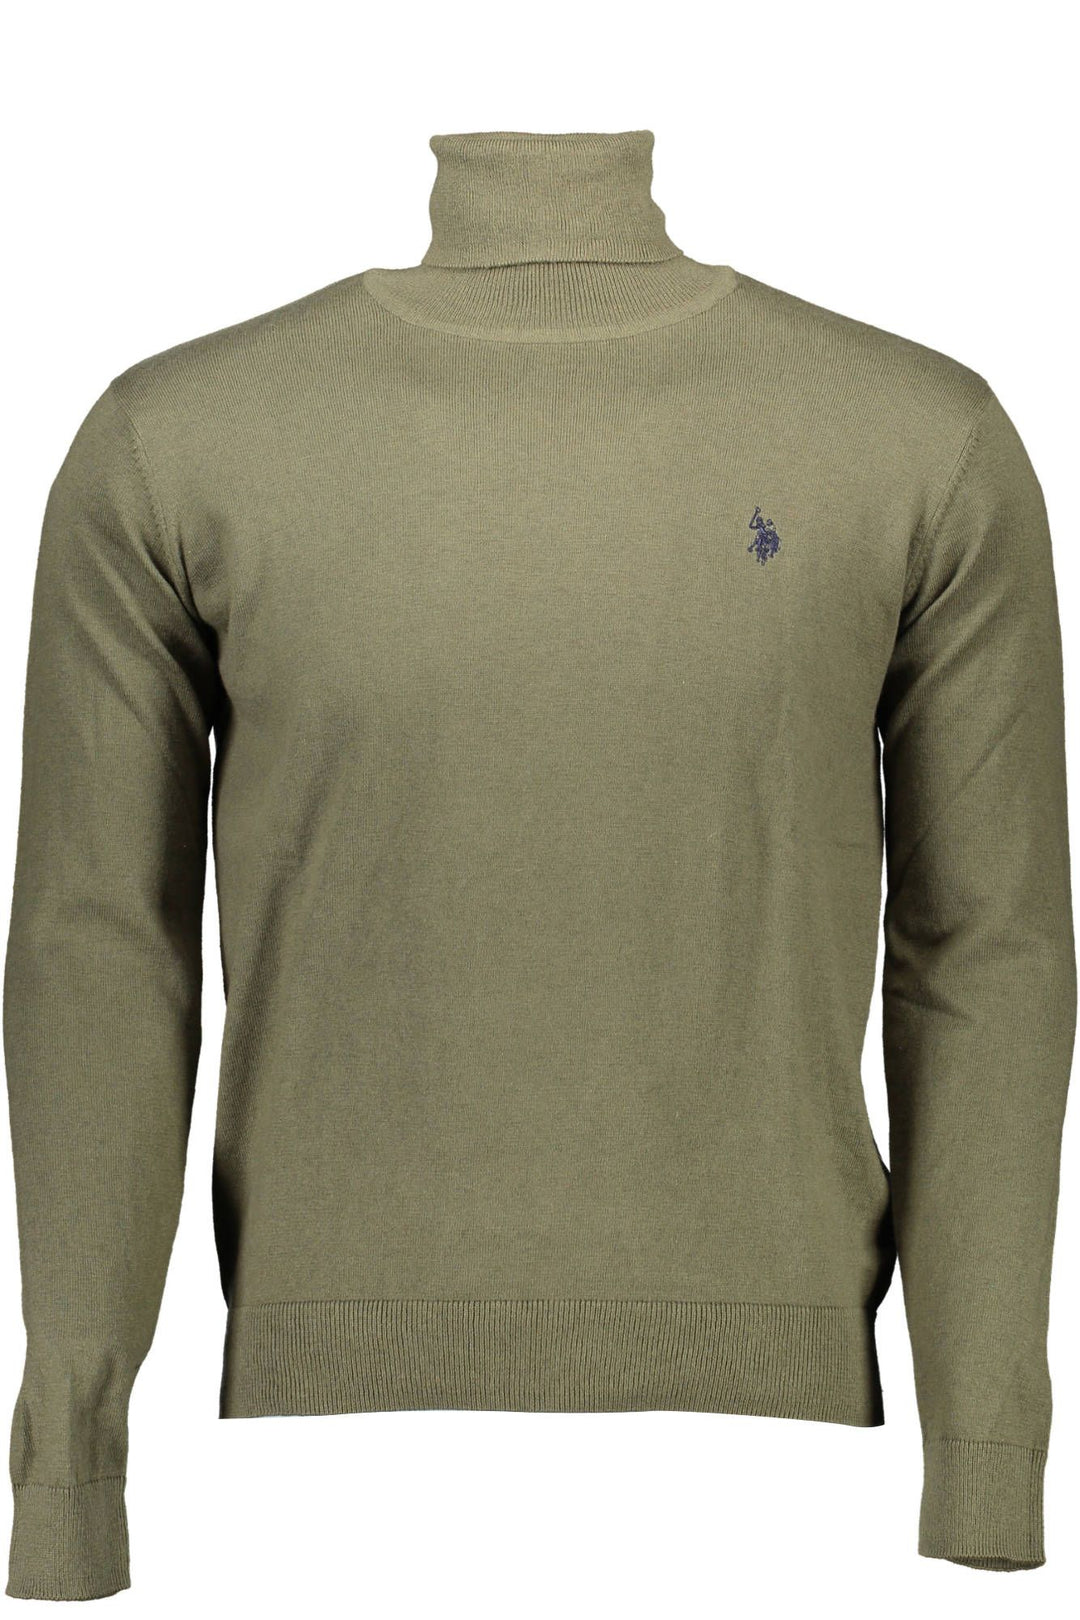 U.S. Polo Assn. Green Cotton Sweater